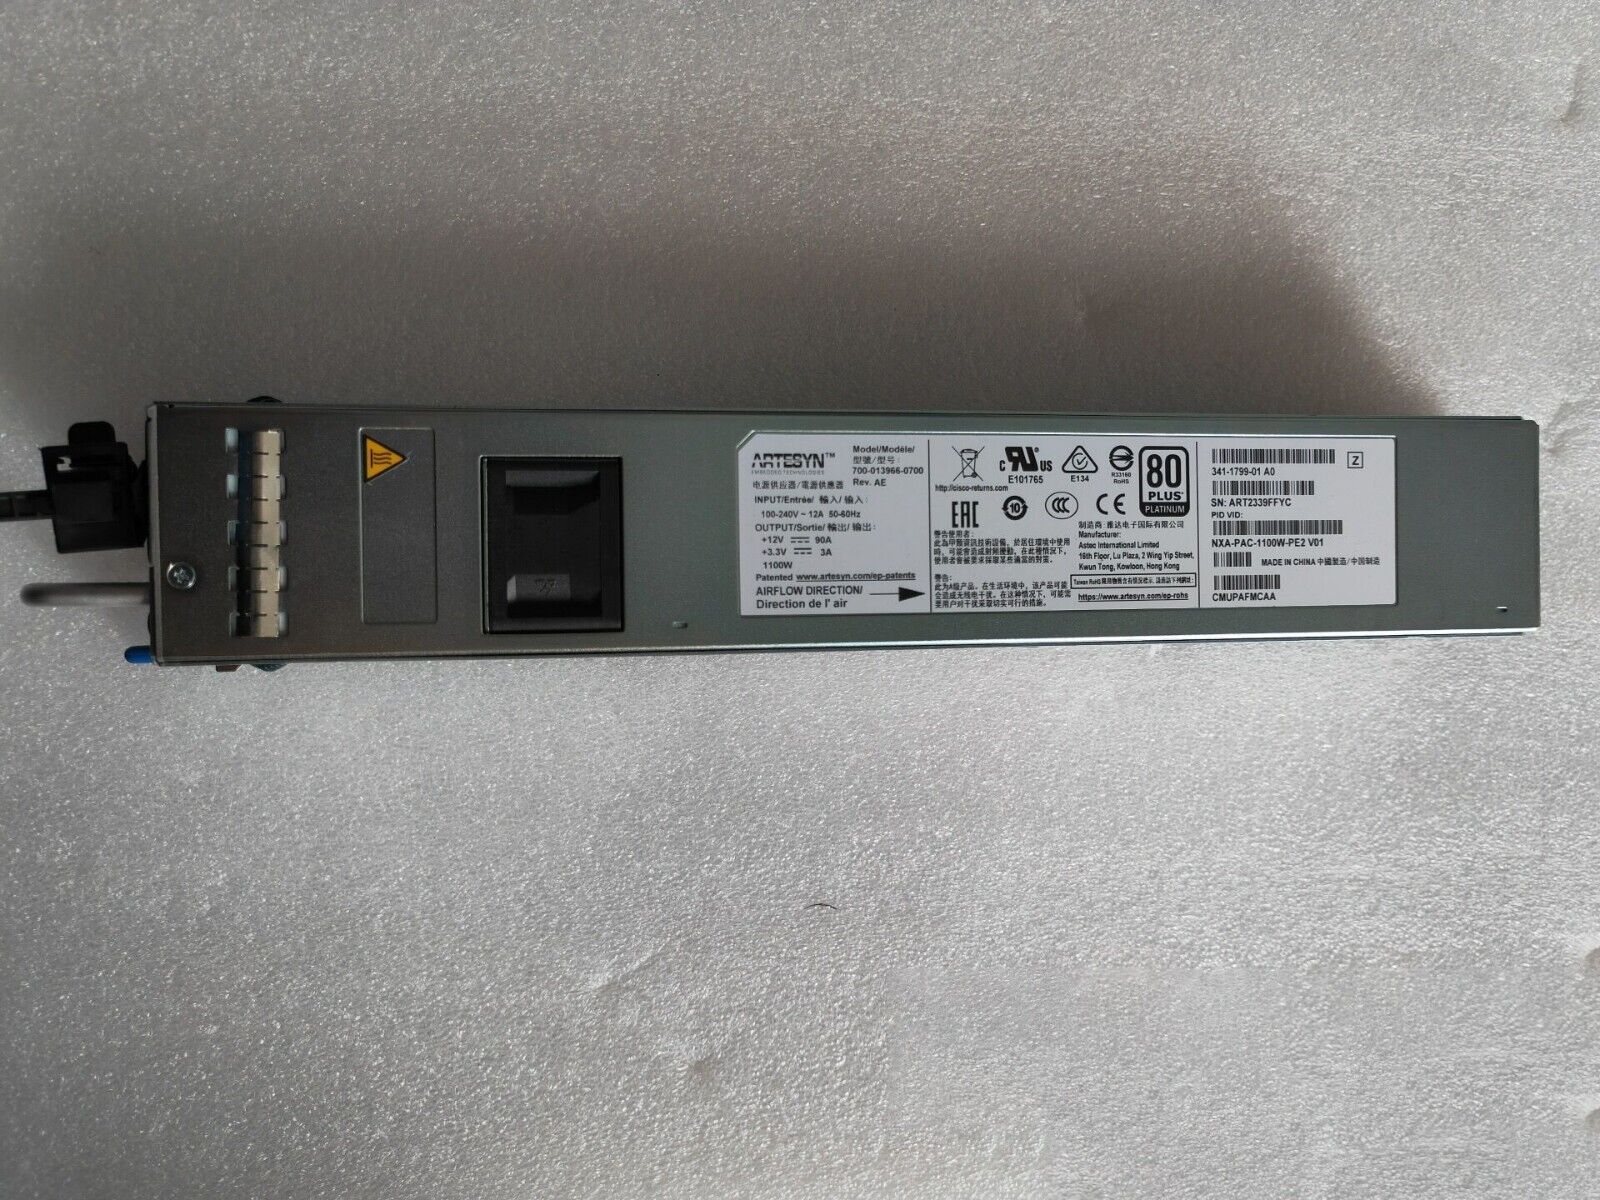 Cisco NXA-PAC-1100W-PE2 Nexus AC 1100W Power supply Tested